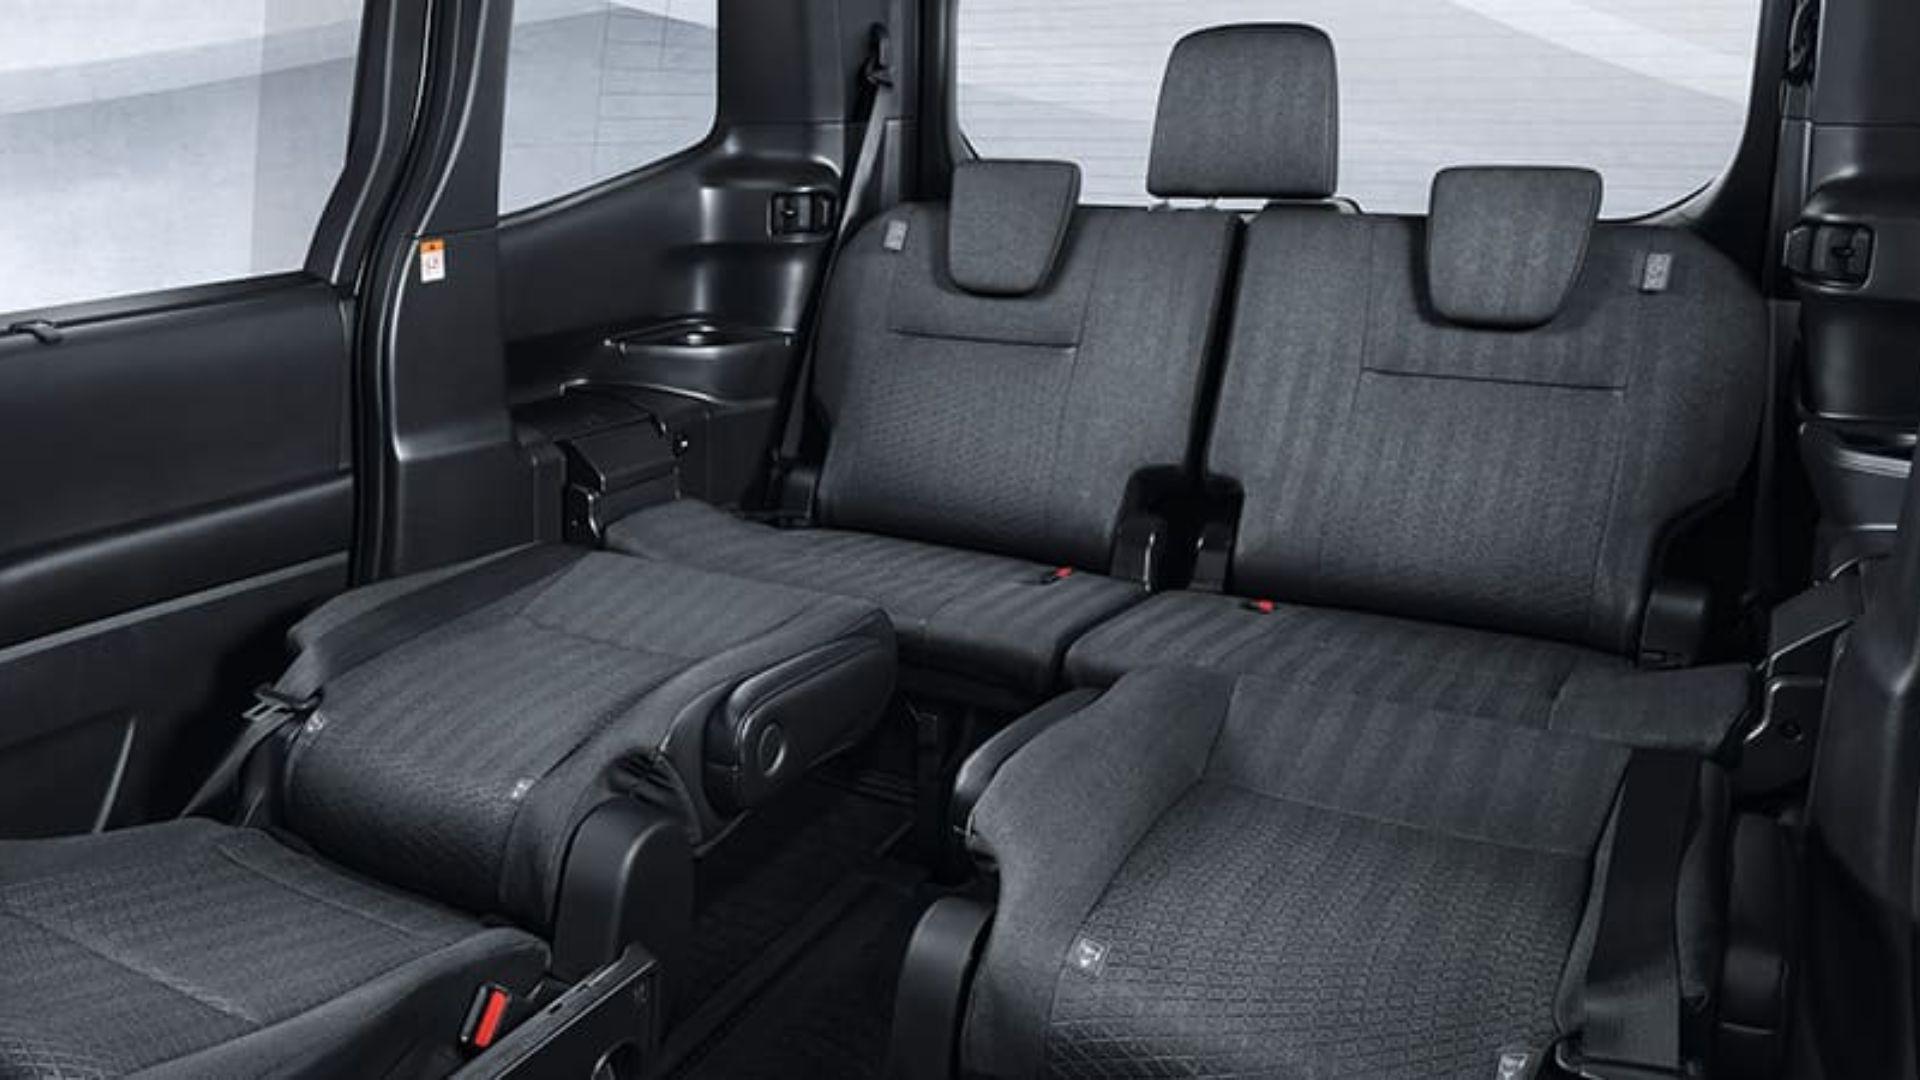 TRAC - LuxCar - Toyota Voxy - Interior 2.jpg